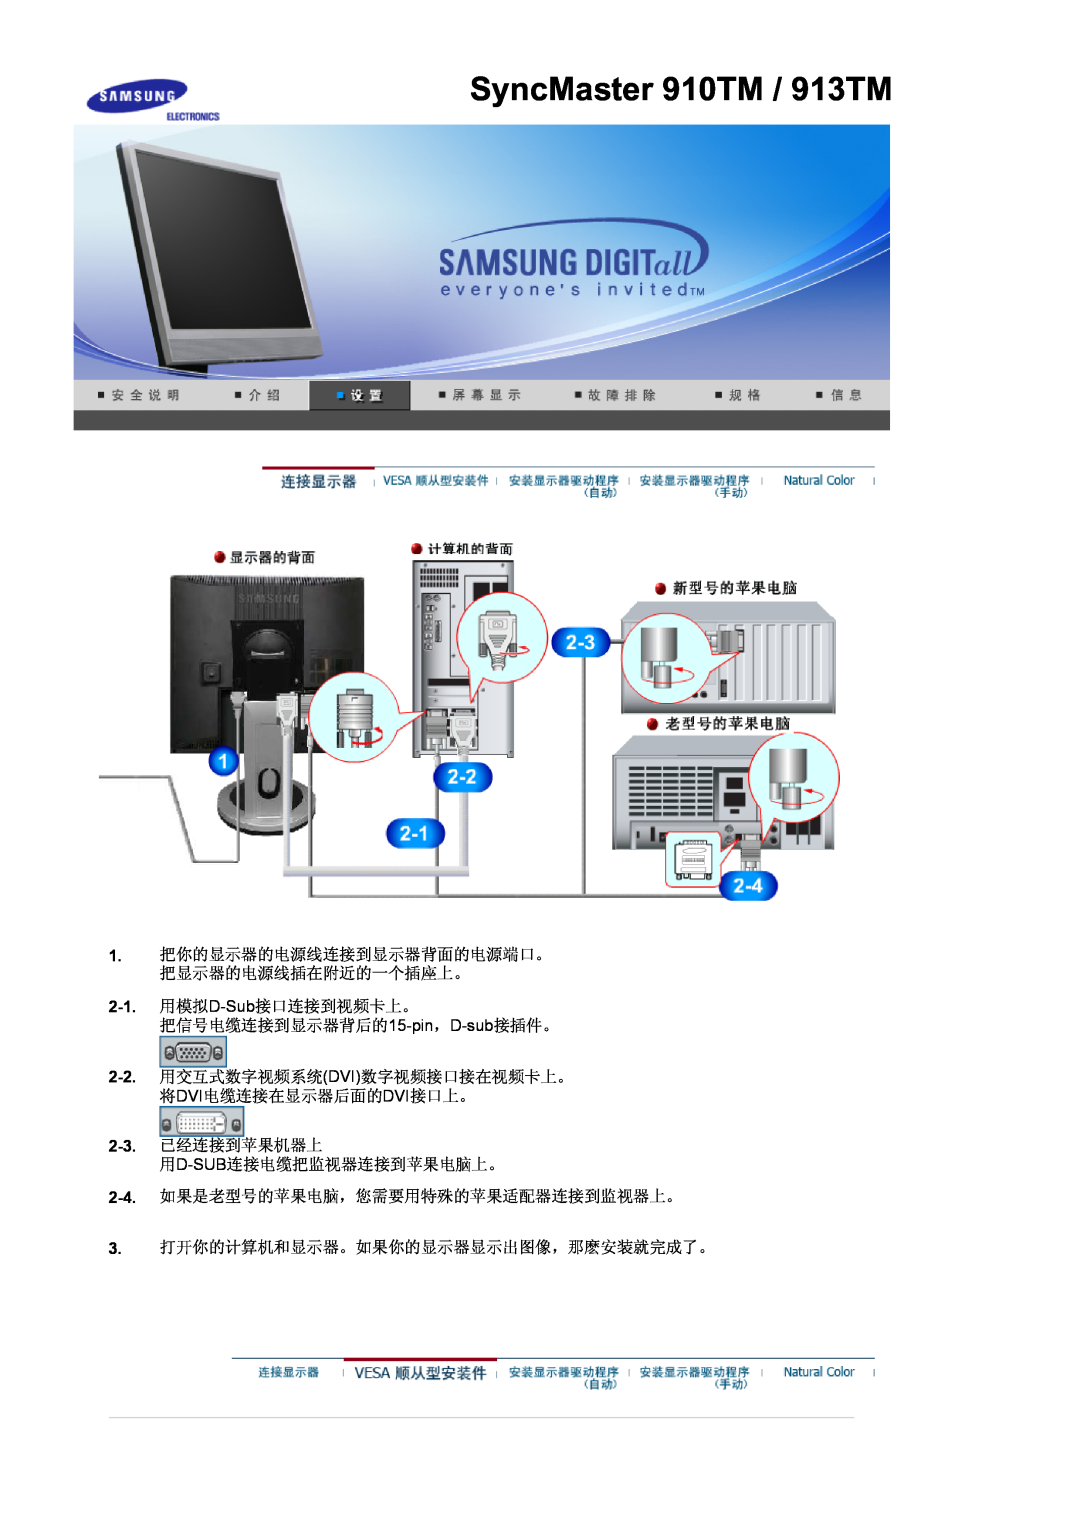 Samsung LS17MJSKSZ/EDC, LS17MJSTSE/EDC, LS19MJSTS7/EDC, MJ19MSTSQ/EDC, MJ17MSTSQ/EDC SyncMaster 910TM / 913TM, D-Sub, 2-2.DVI 